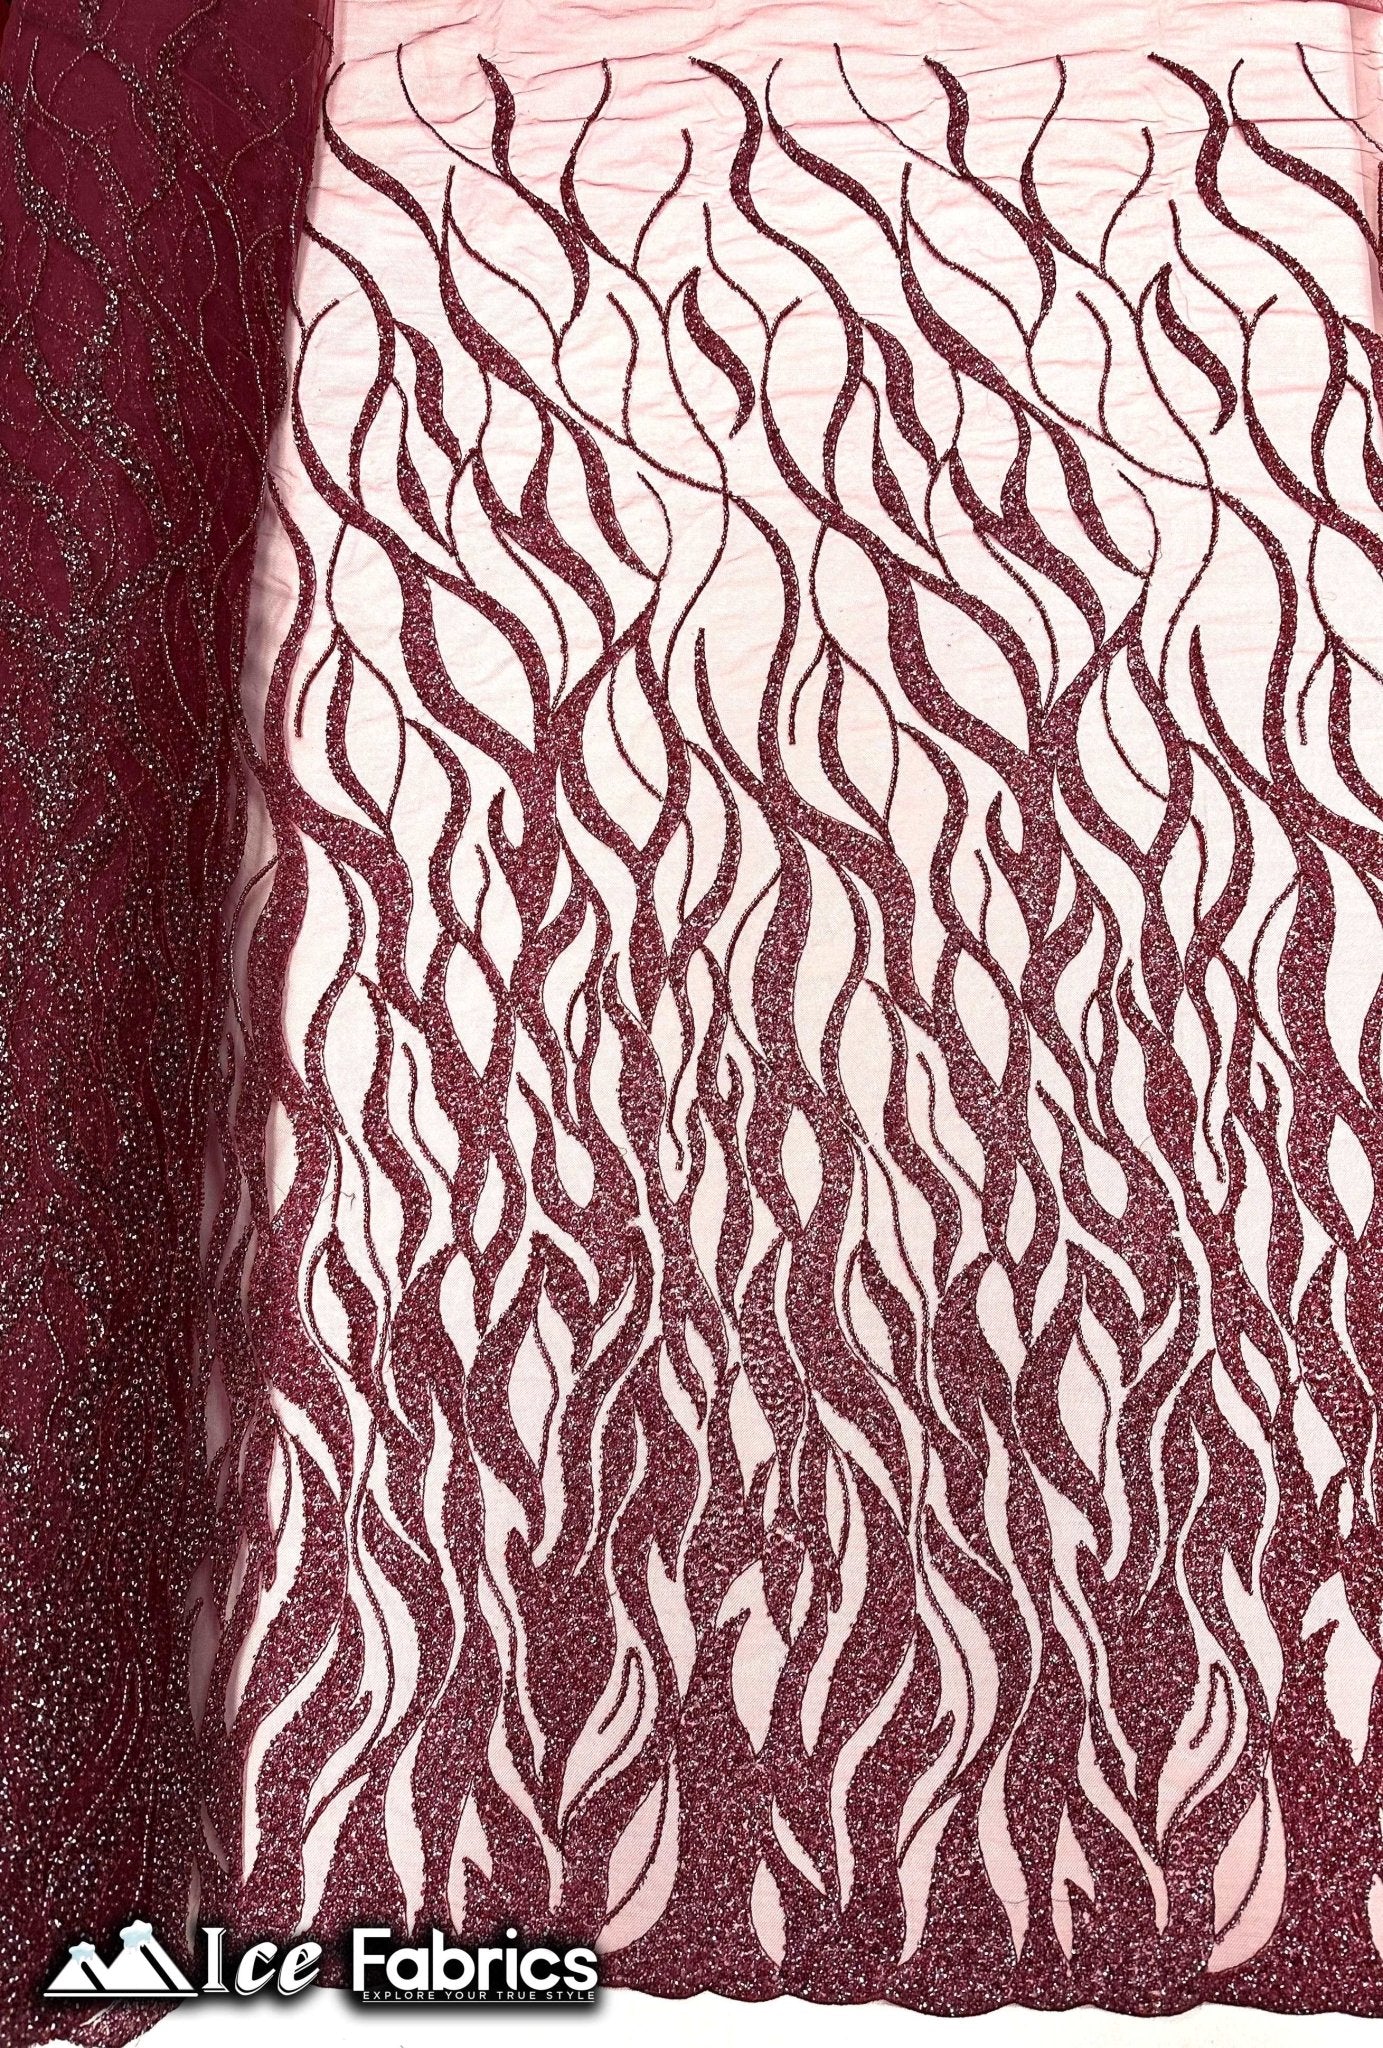 Elegant Heavy Beaded Fabric Lace Fabric with SequinICE FABRICSICE FABRICSBurgundyBy The Yard (54" Wide)Elegant Heavy Beaded Fabric Lace Fabric with Sequin ICE FABRICS Burgundy